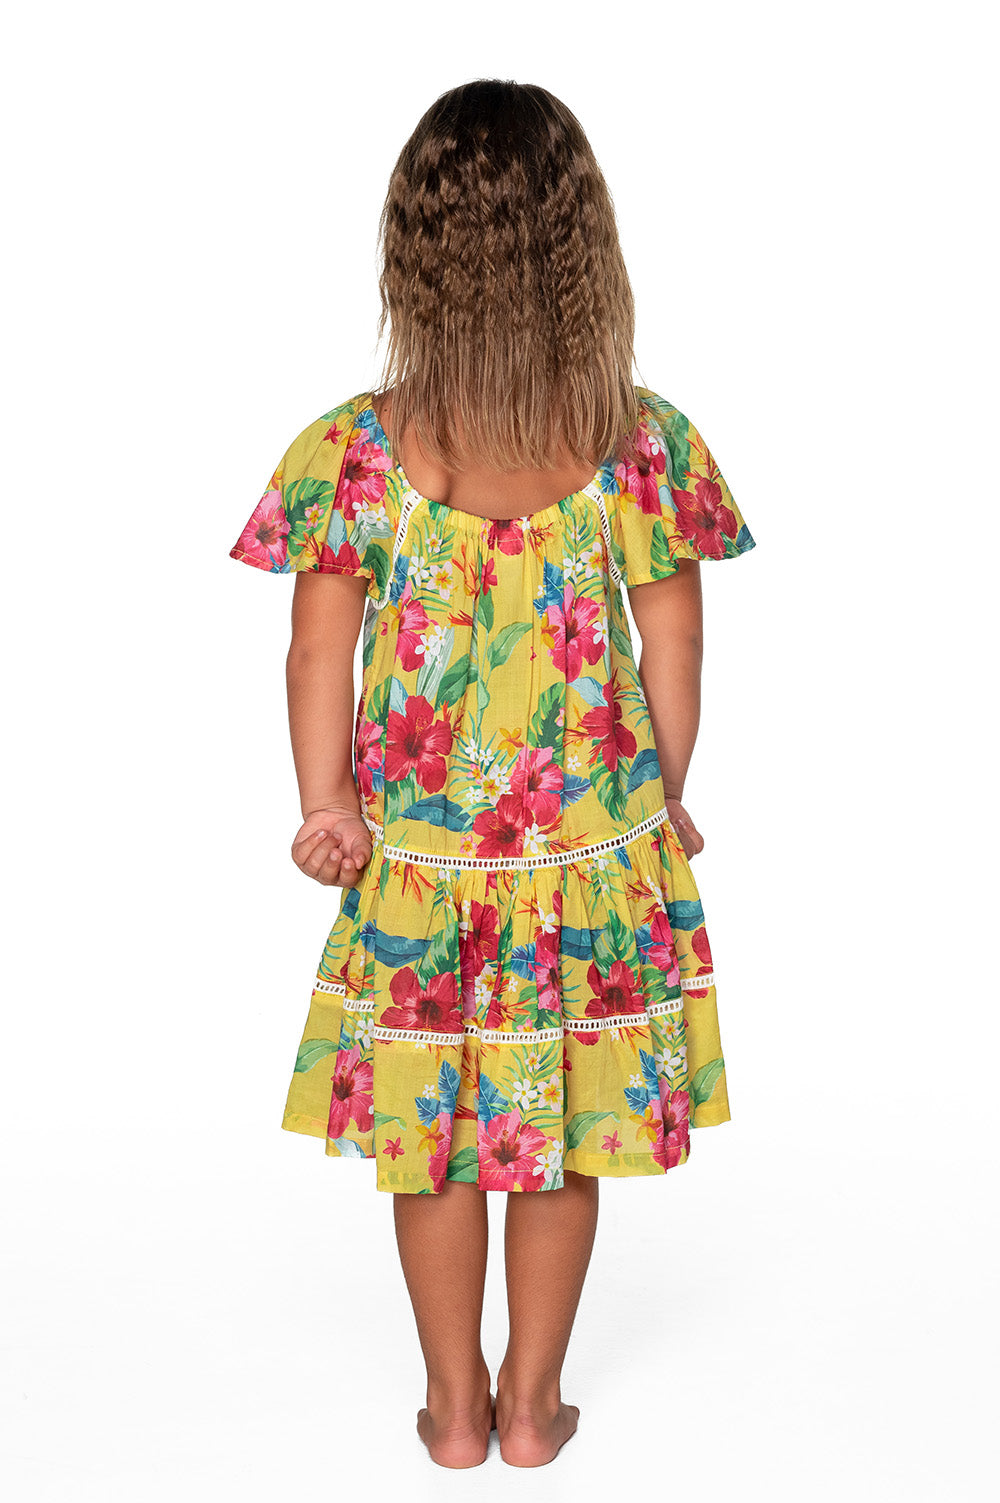 Tropicana Short Sleeve Dress (Lei) - Back